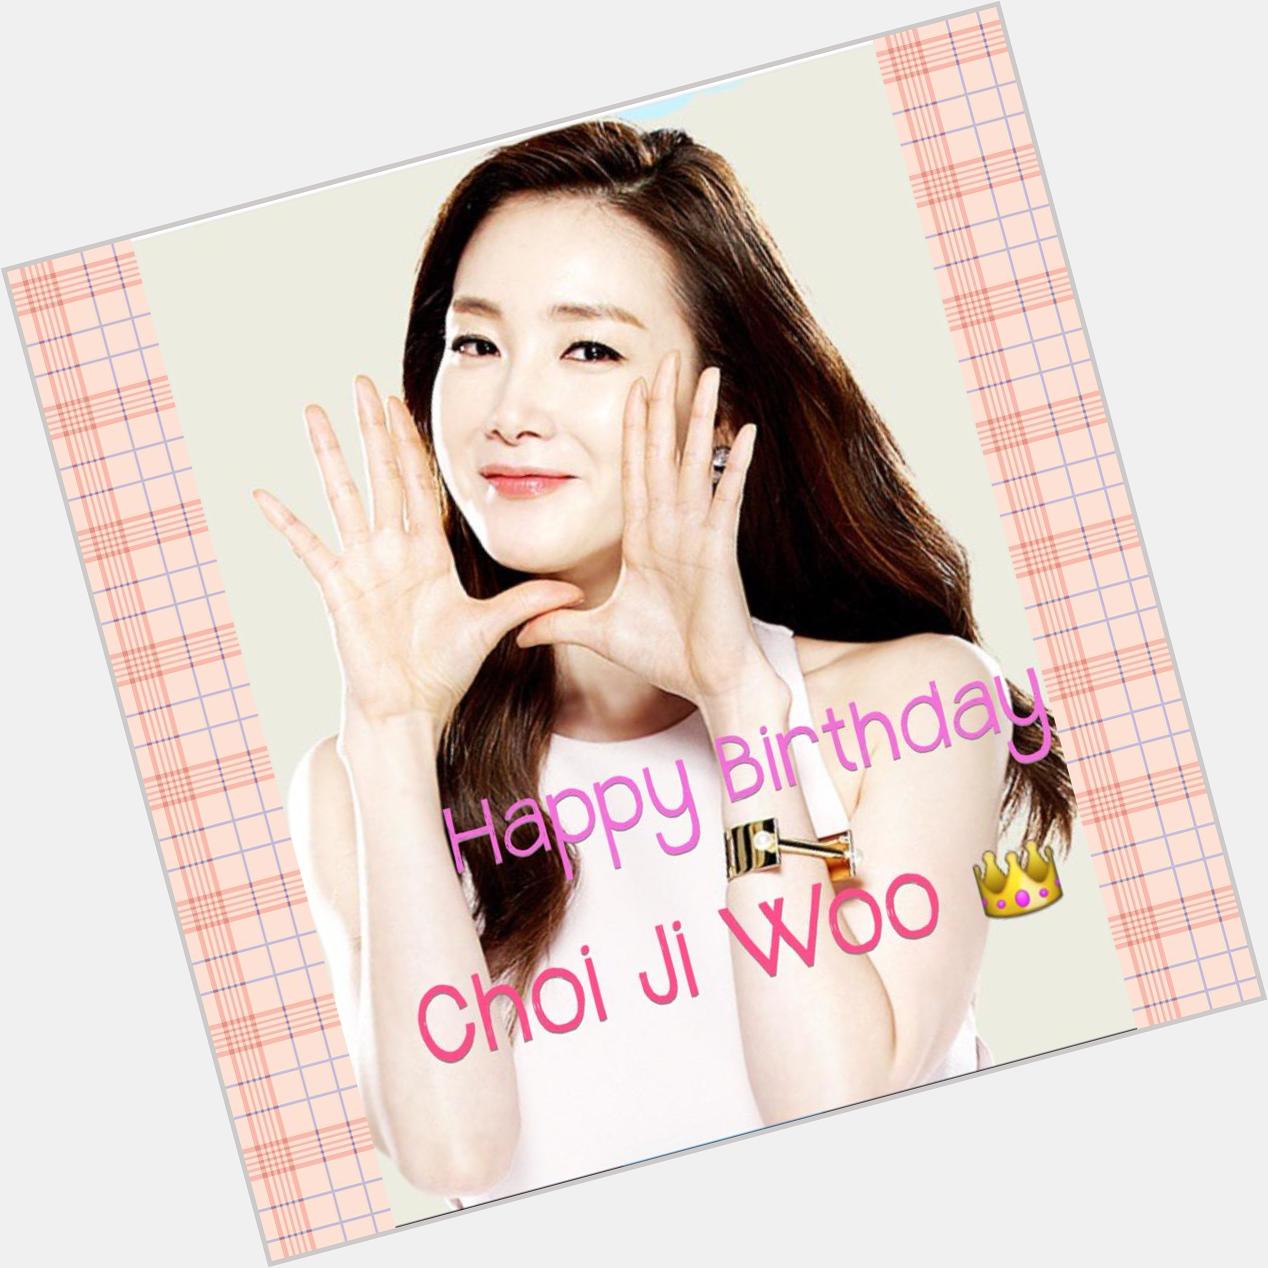 Happy Birthday Choi Ji Woo
11/06/15 